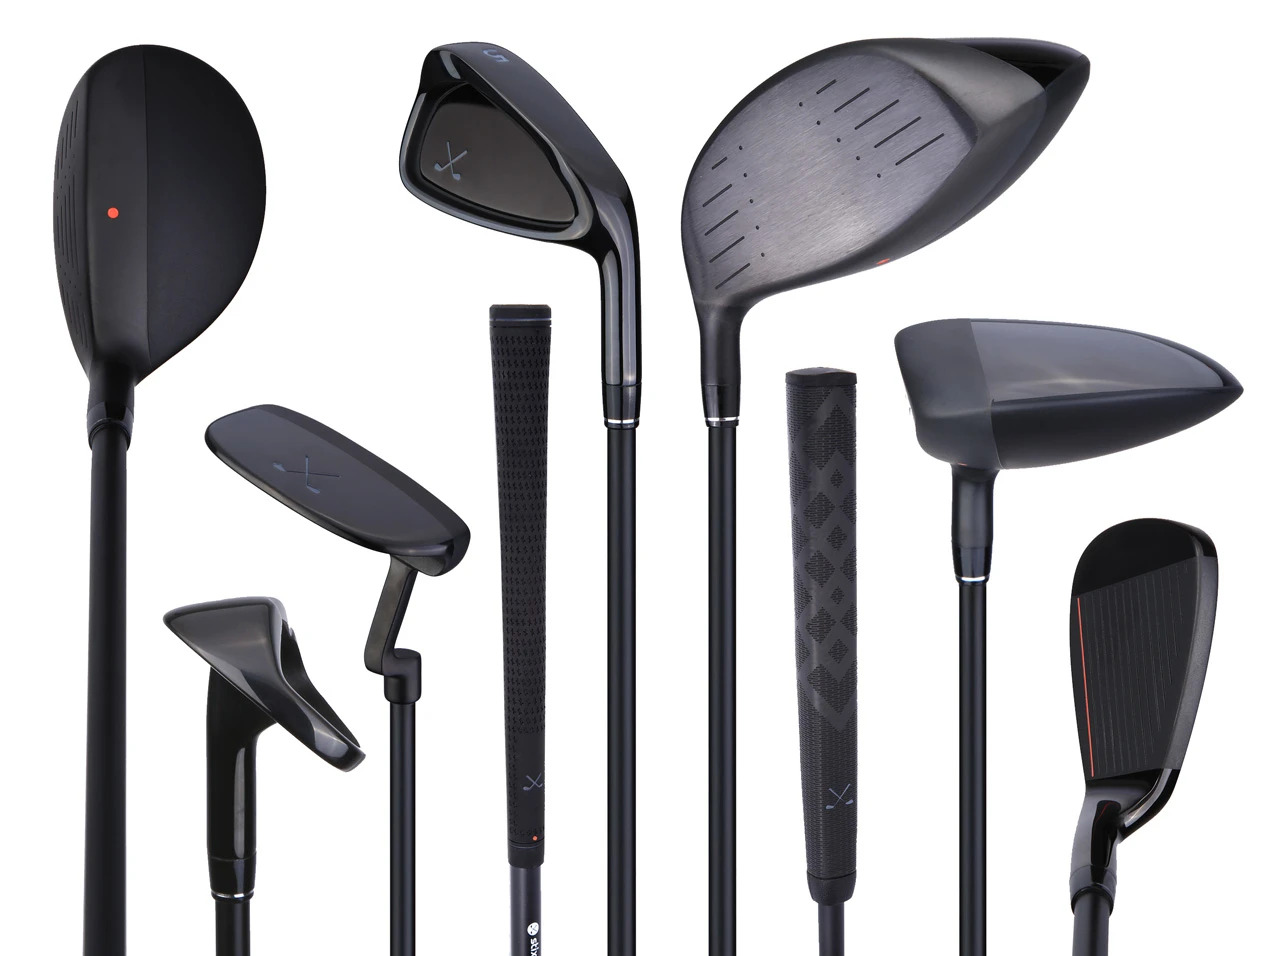 verdamping Manifesteren Verplicht Stix Golf thinks clubs need to get simpler for broader appeal—hence its  $800 12-piece set | Golf Equipment: Clubs, Balls, Bags | GolfDigest.com